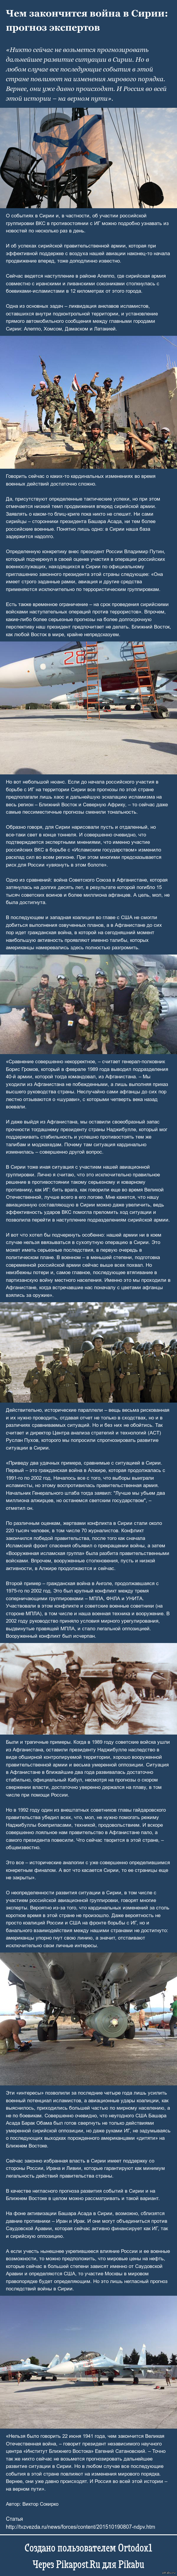     :    http://tvzvezda.ru/news/forces/content/201510190807-ndpv.htm